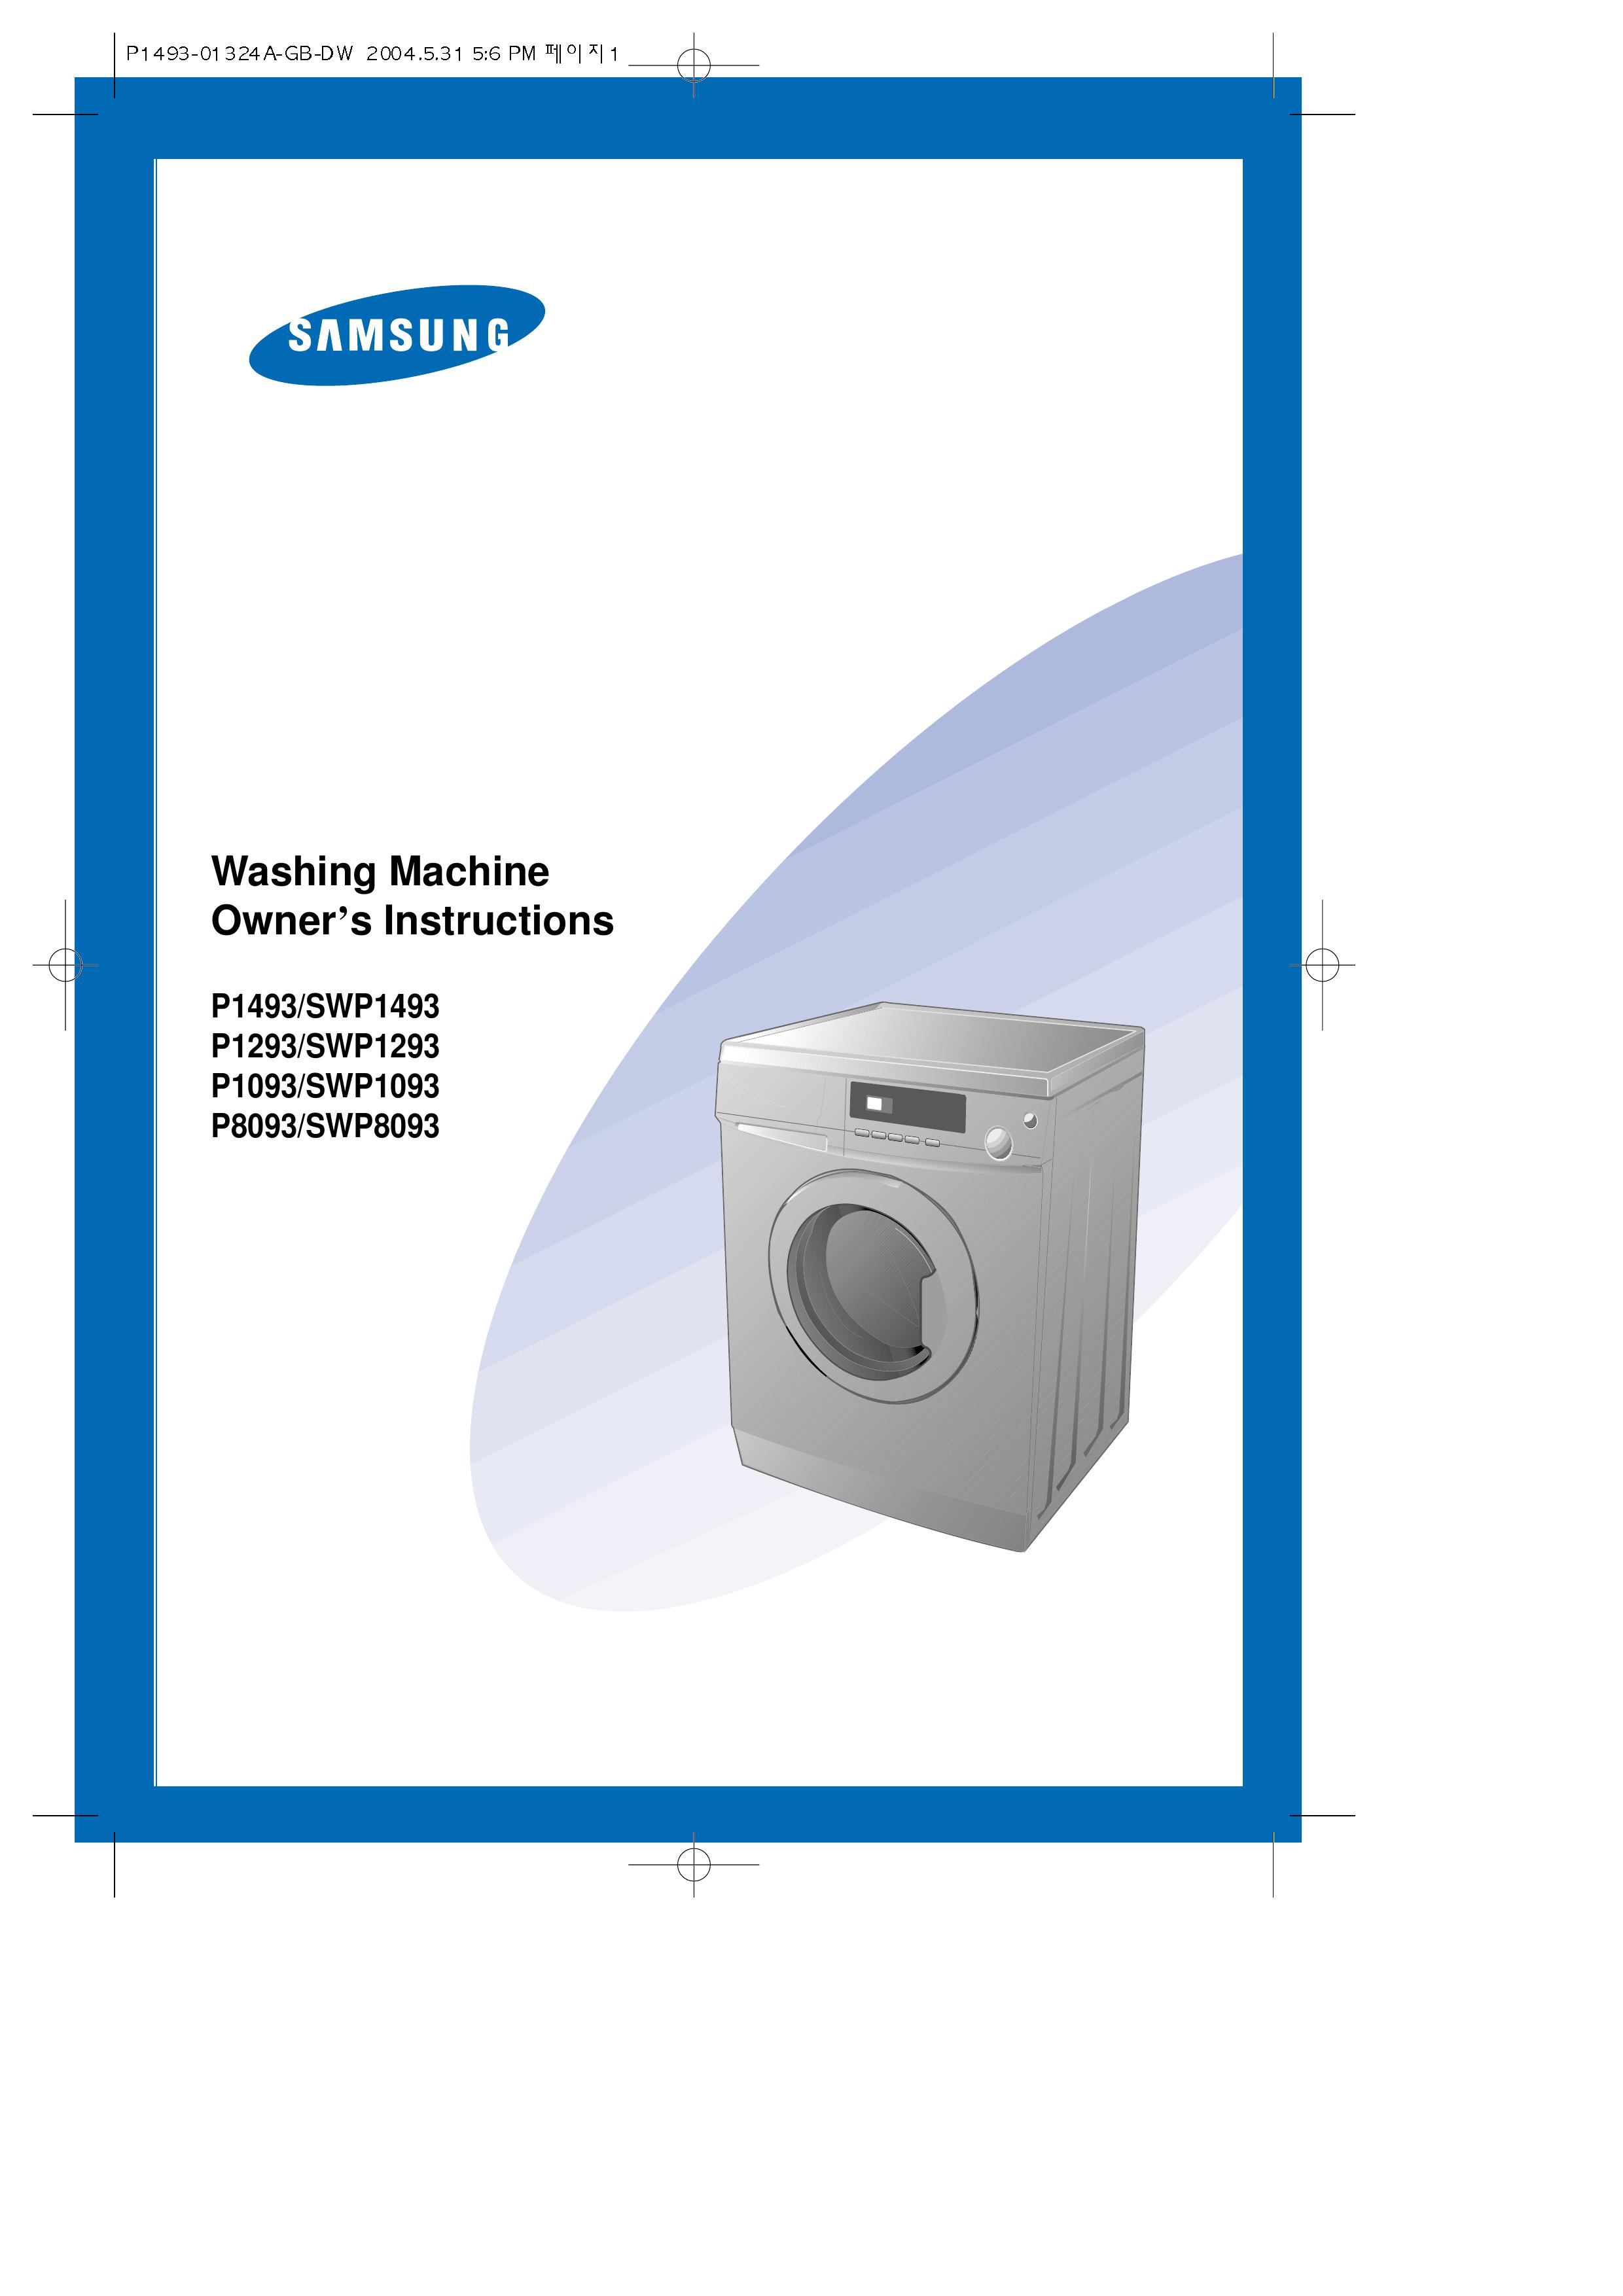 Samsung P1293 Washer/Dryer User Manual